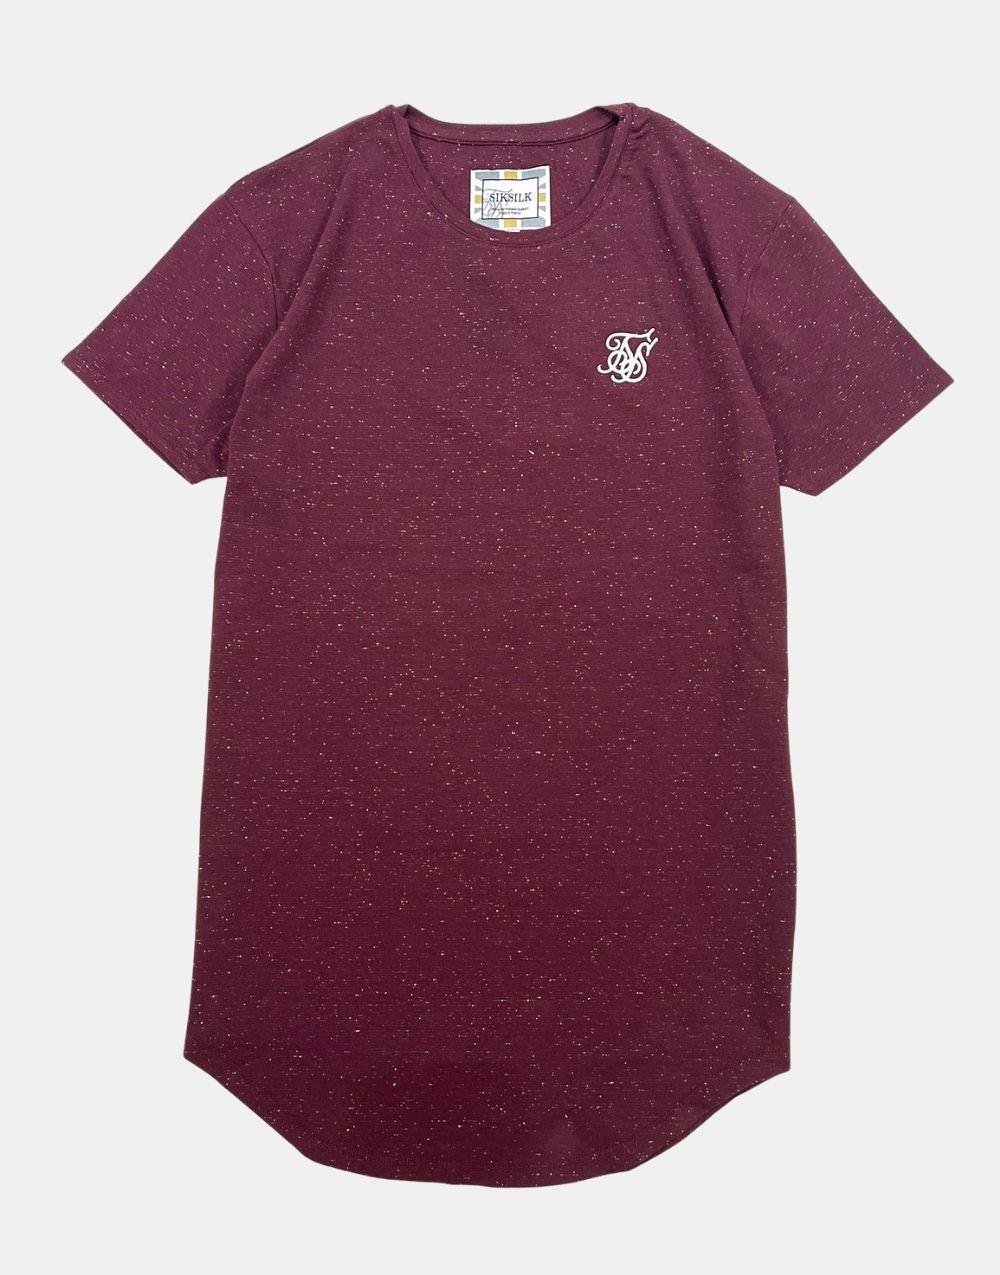 SikSilk Neps Gym Tee Men's T-Shirt Claret Red - STREET MODE ™